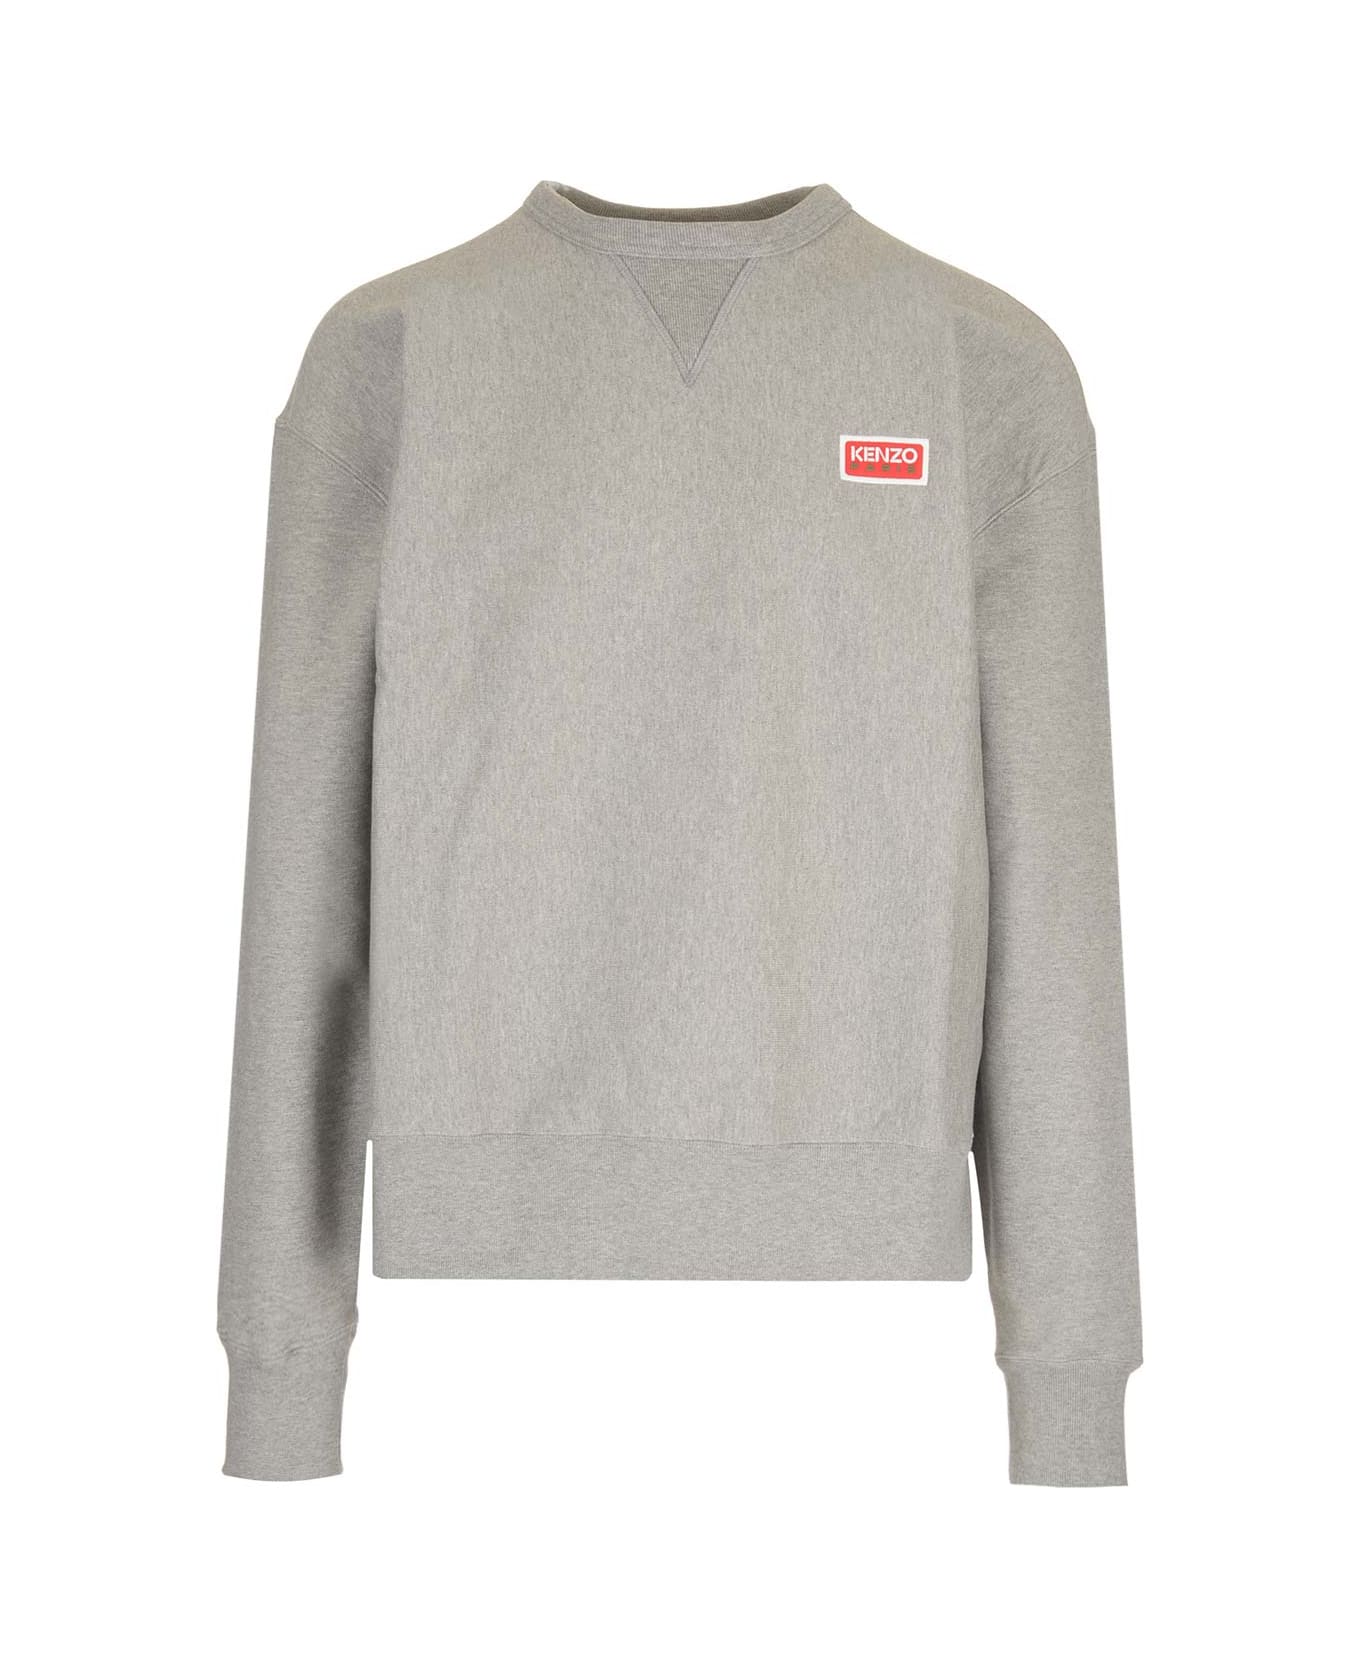 Kenzo Crewneck Signature Sweatshirt - Grey